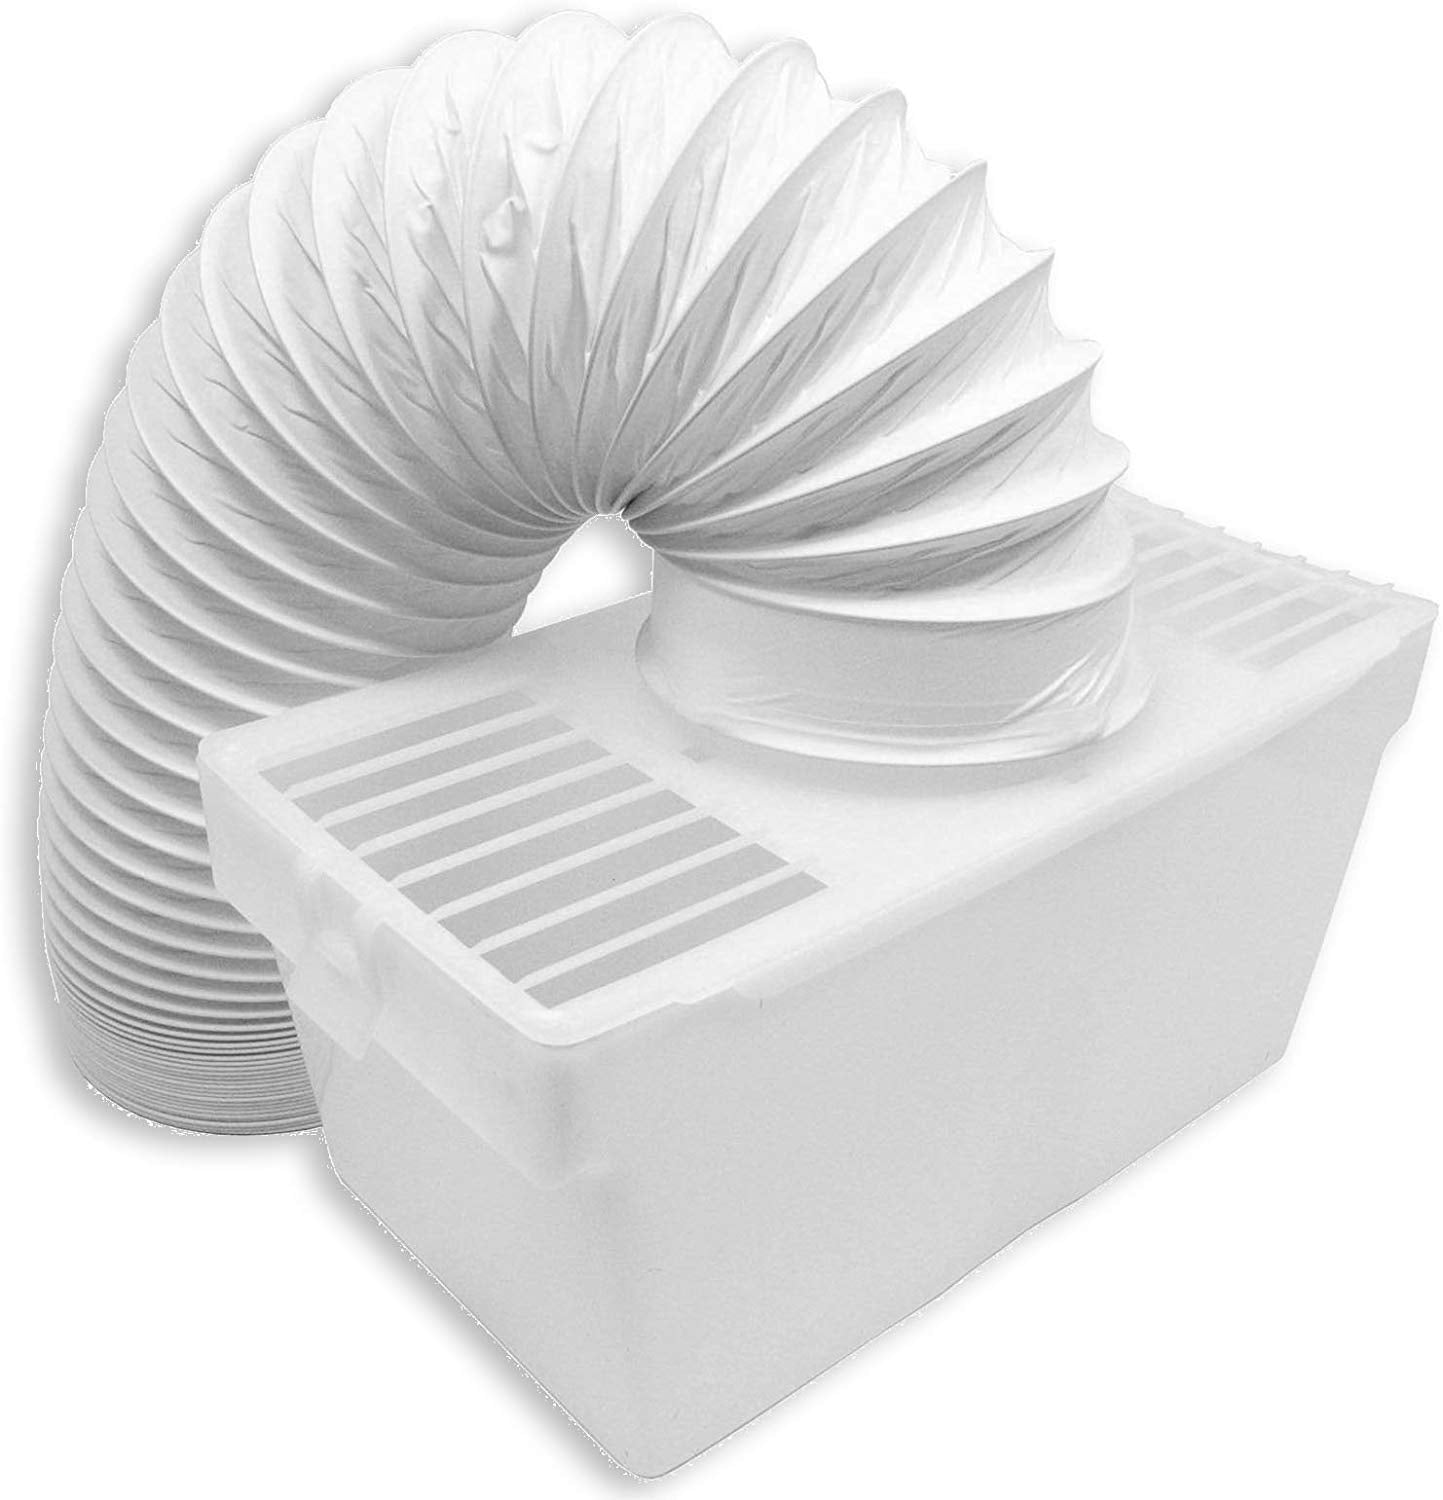 Condenser Vent Box & Hose Kit for Servis Vented Tumble Dryers (1.5m / 4" Diameter)